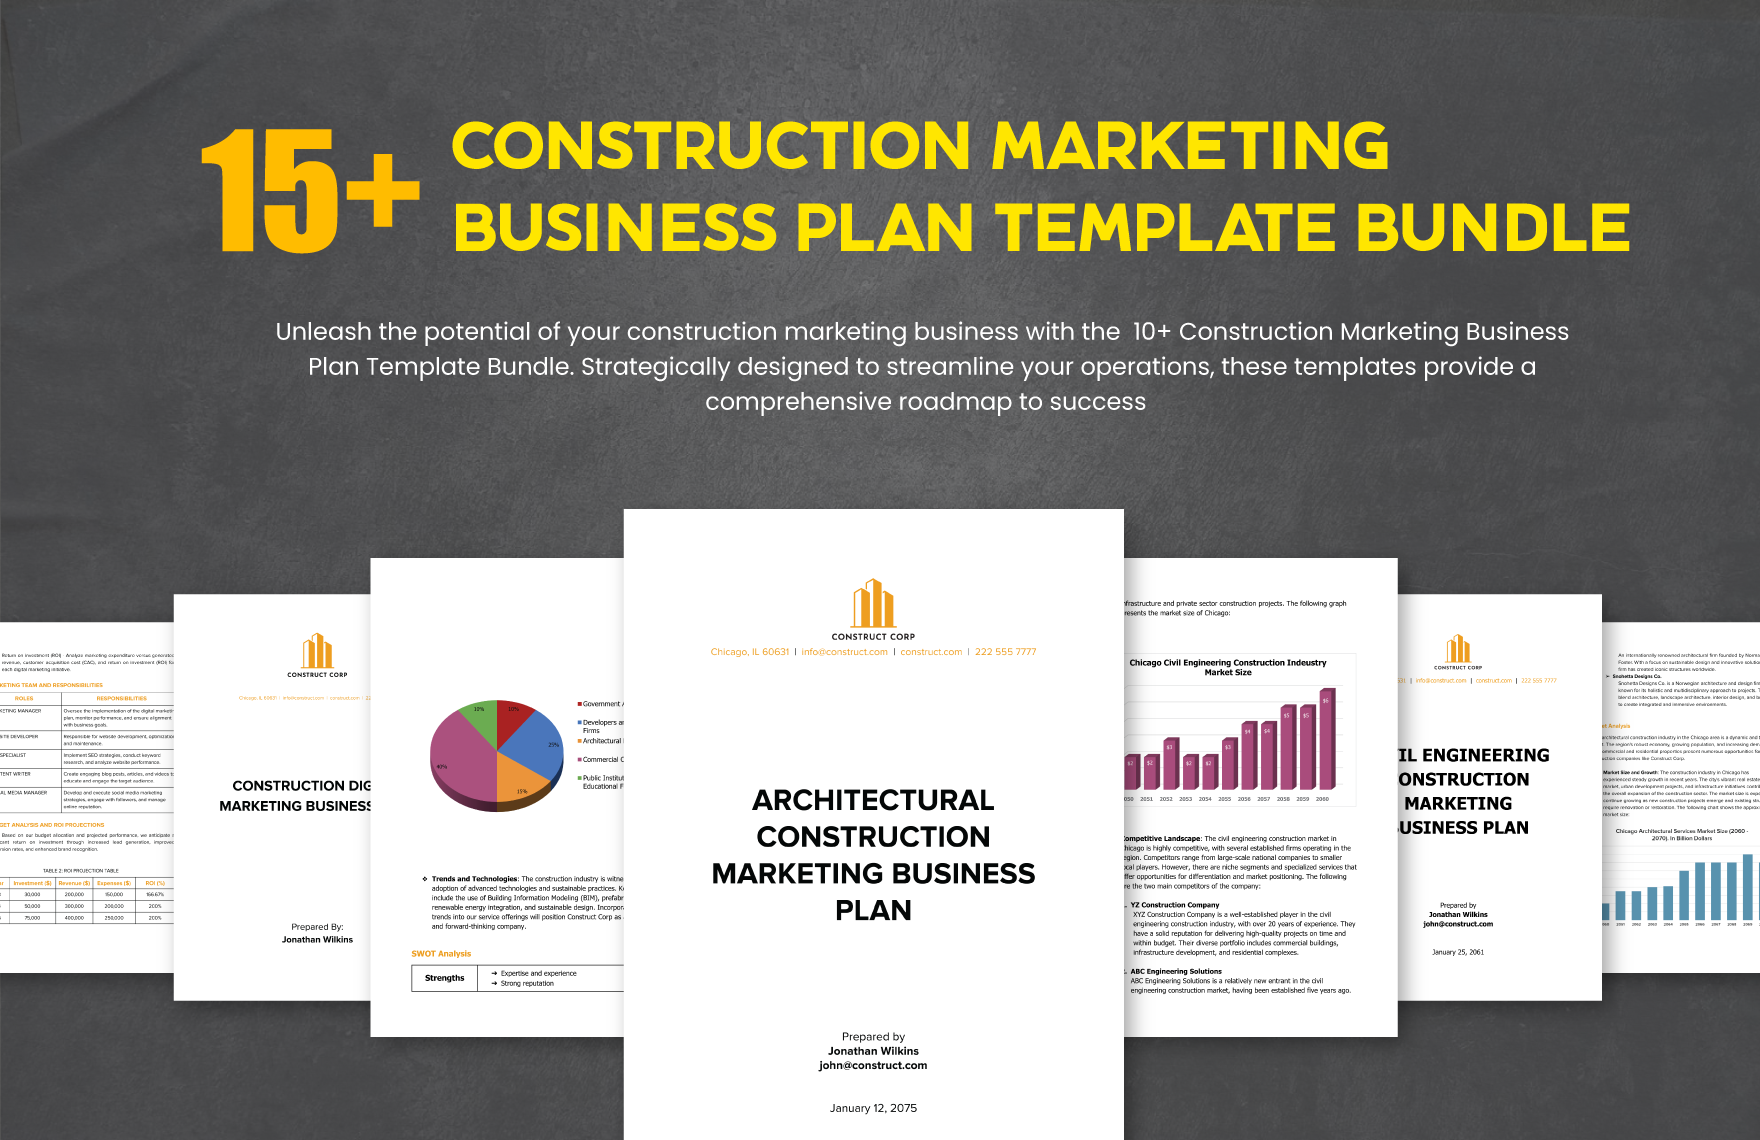 15+ Construction Marketing Business Plan Template Bundle in Word, Google Docs